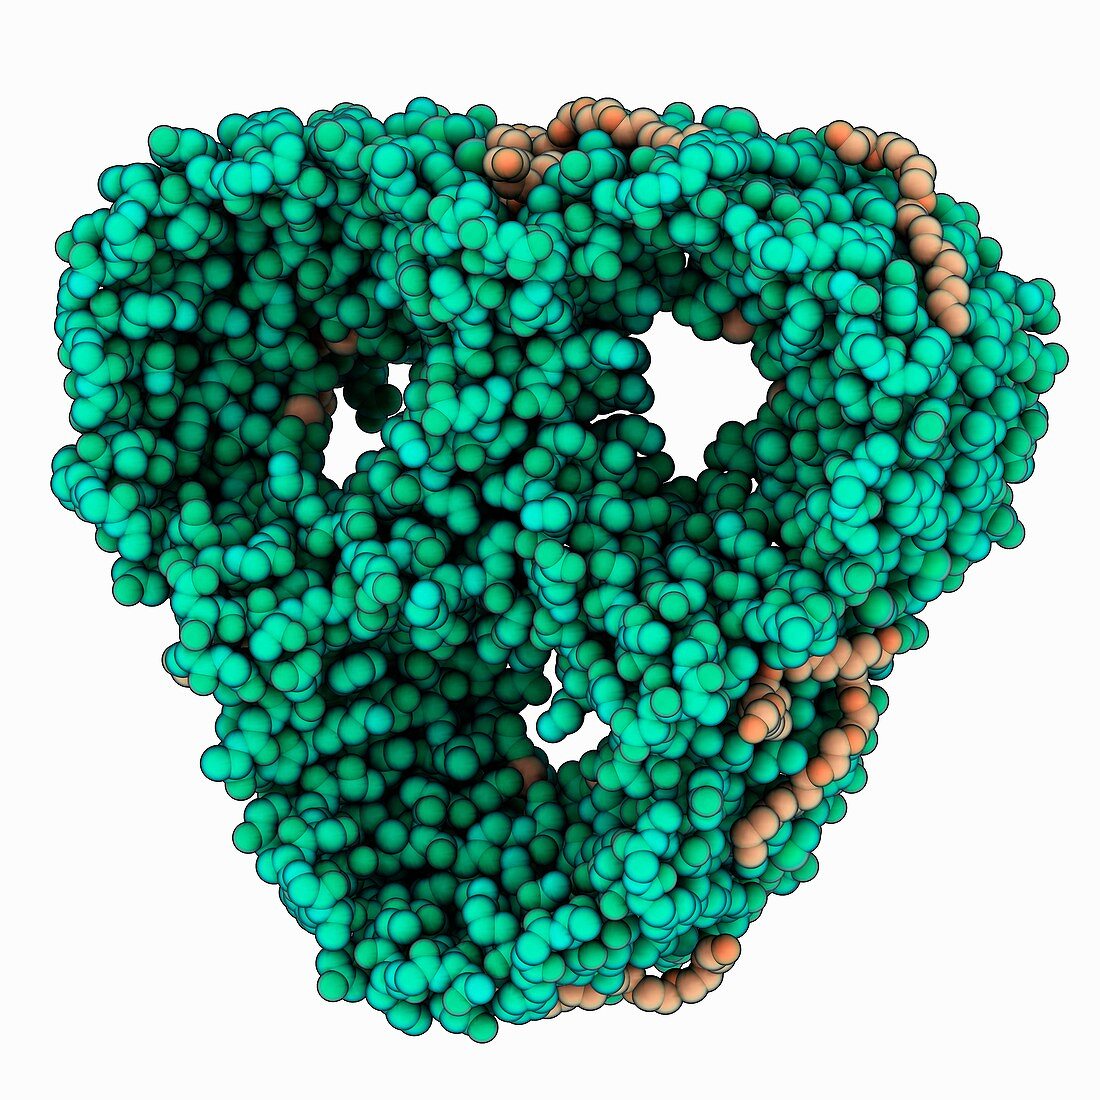 Porin molecule